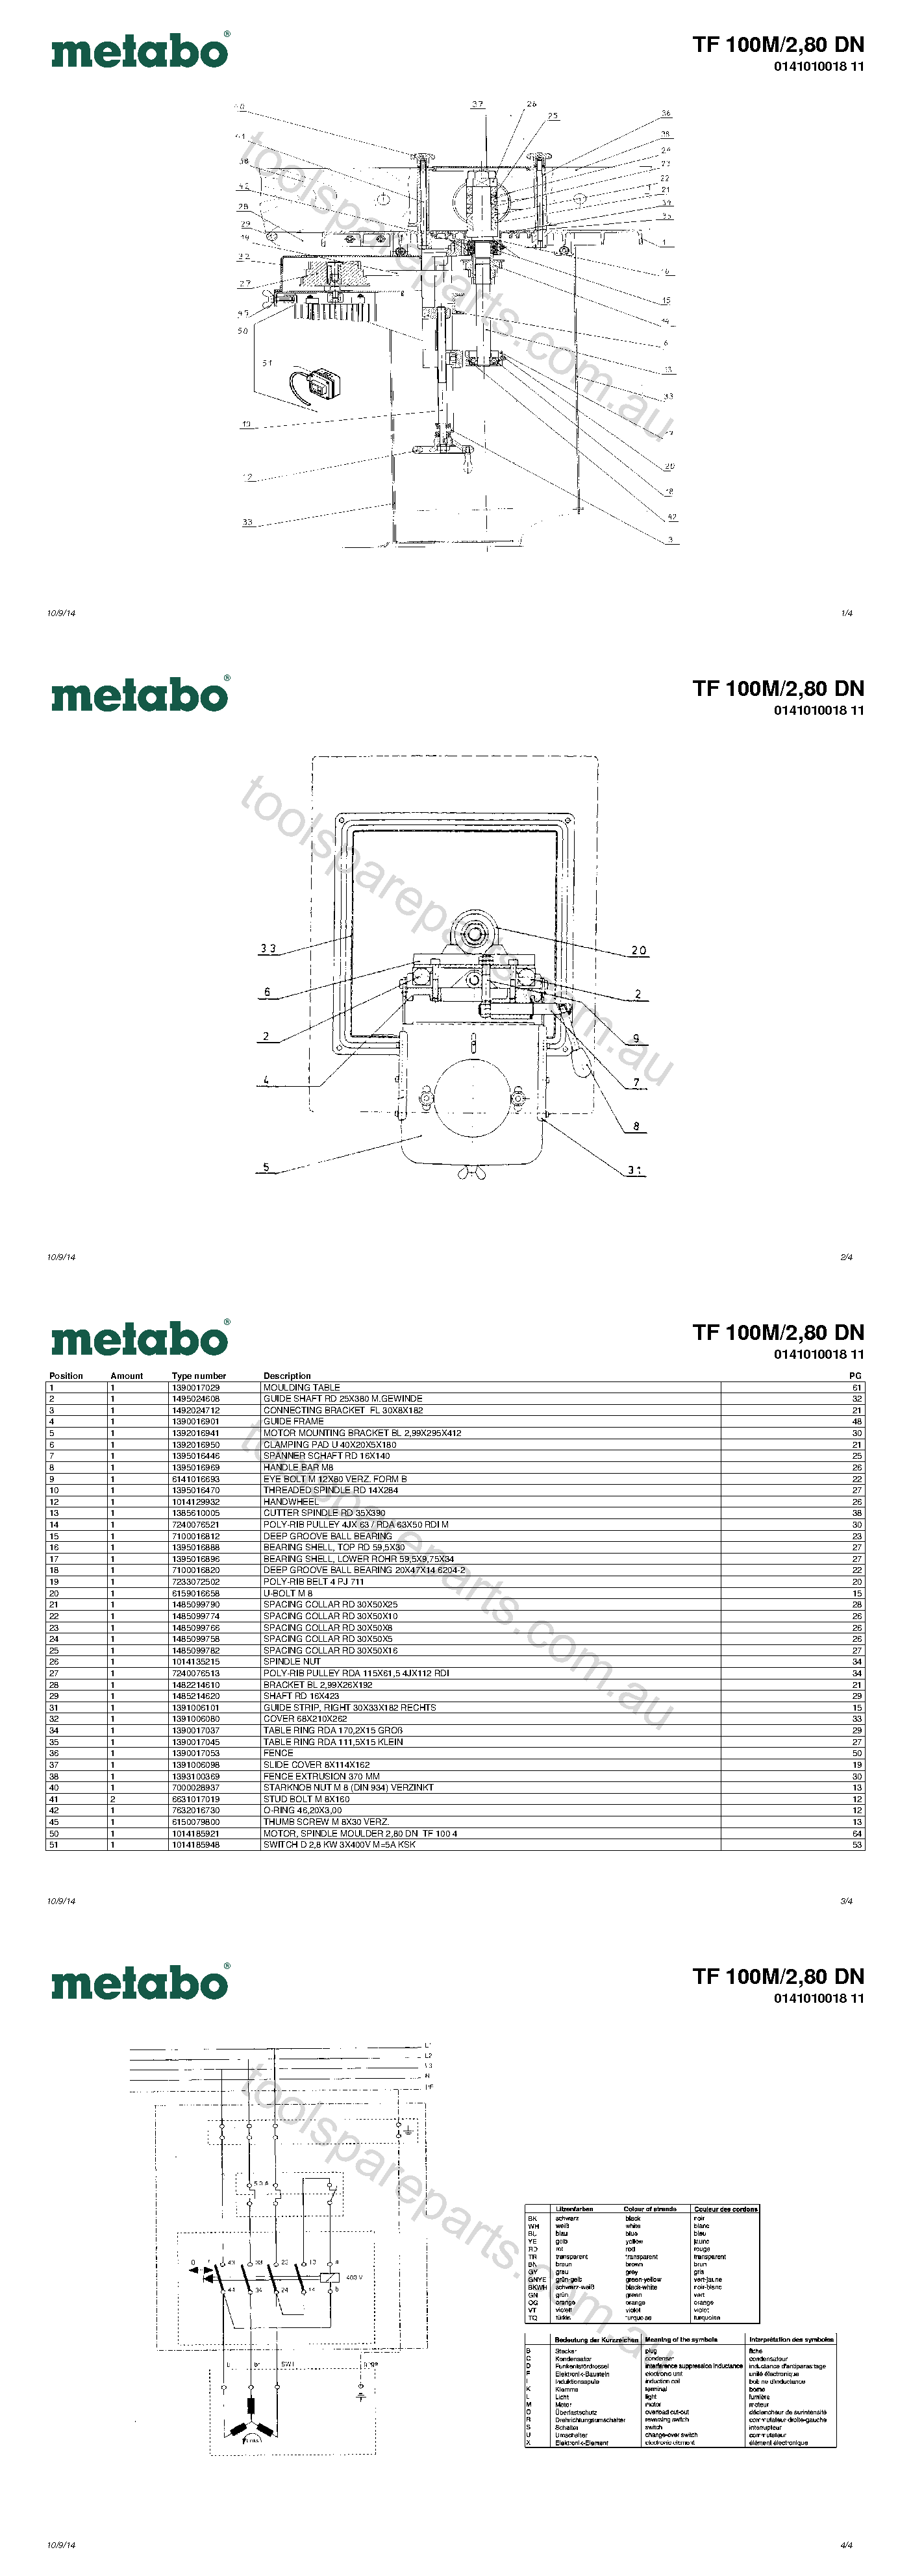 Metabo TF 100M/2,80 DN 0141010018 11  Diagram 1